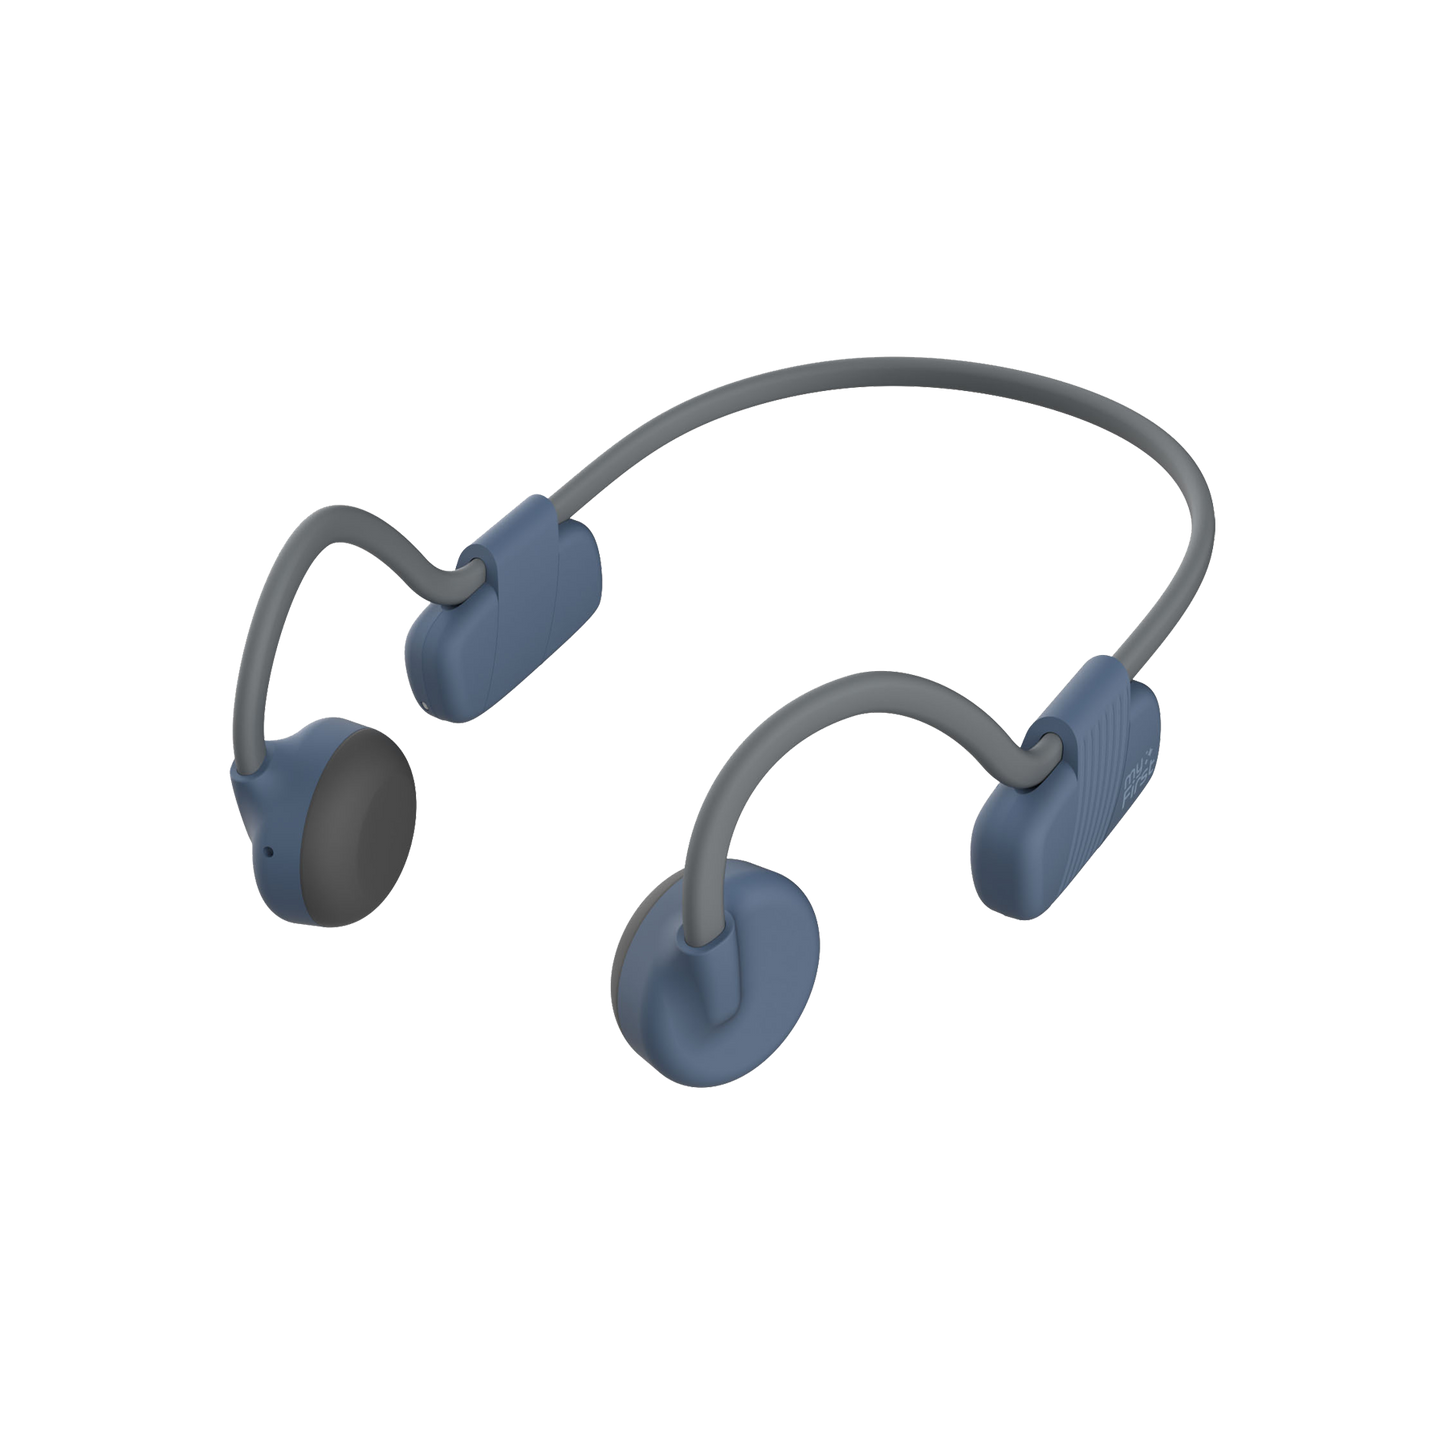 Bone Conduction Headphone for Kids | myFirst Headphones BC Wireless Lite